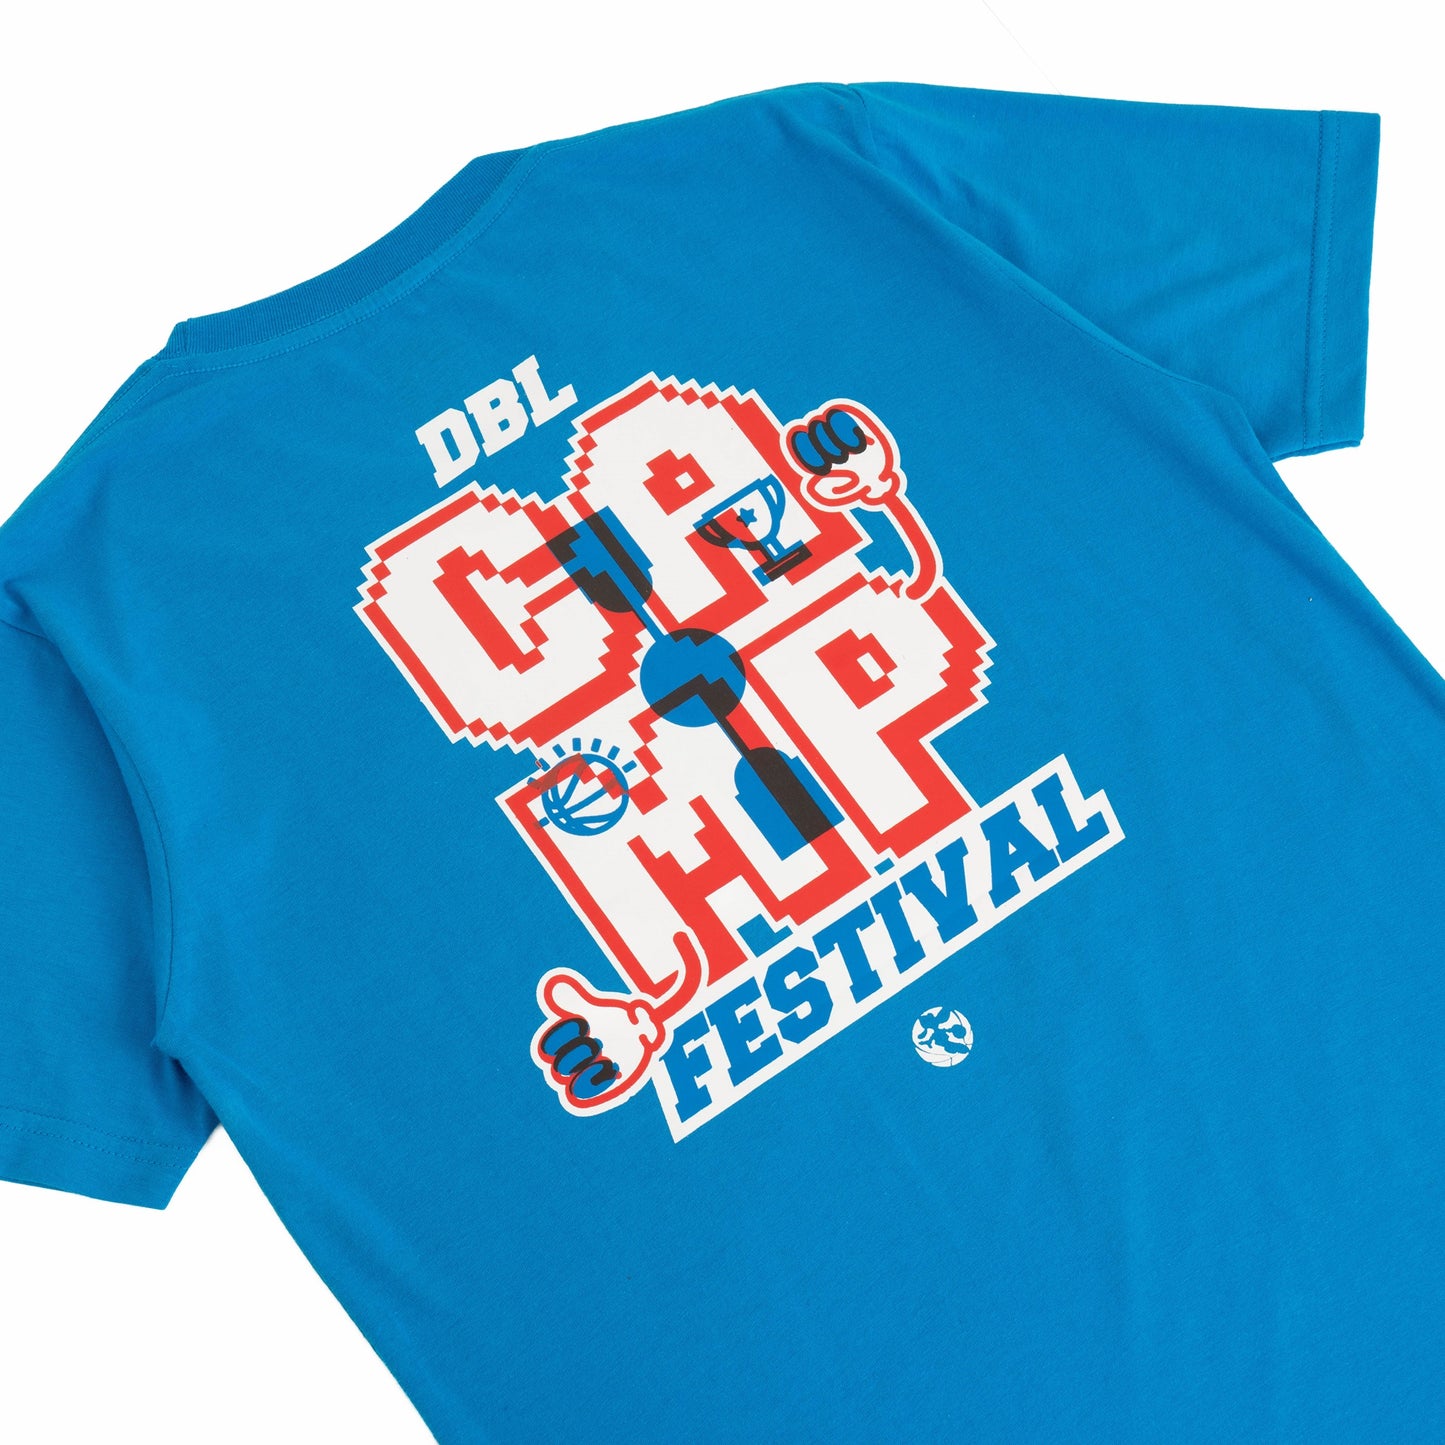 AZA x DBL Camp 24 Series T-Shirt Pixel Typograph - Blue